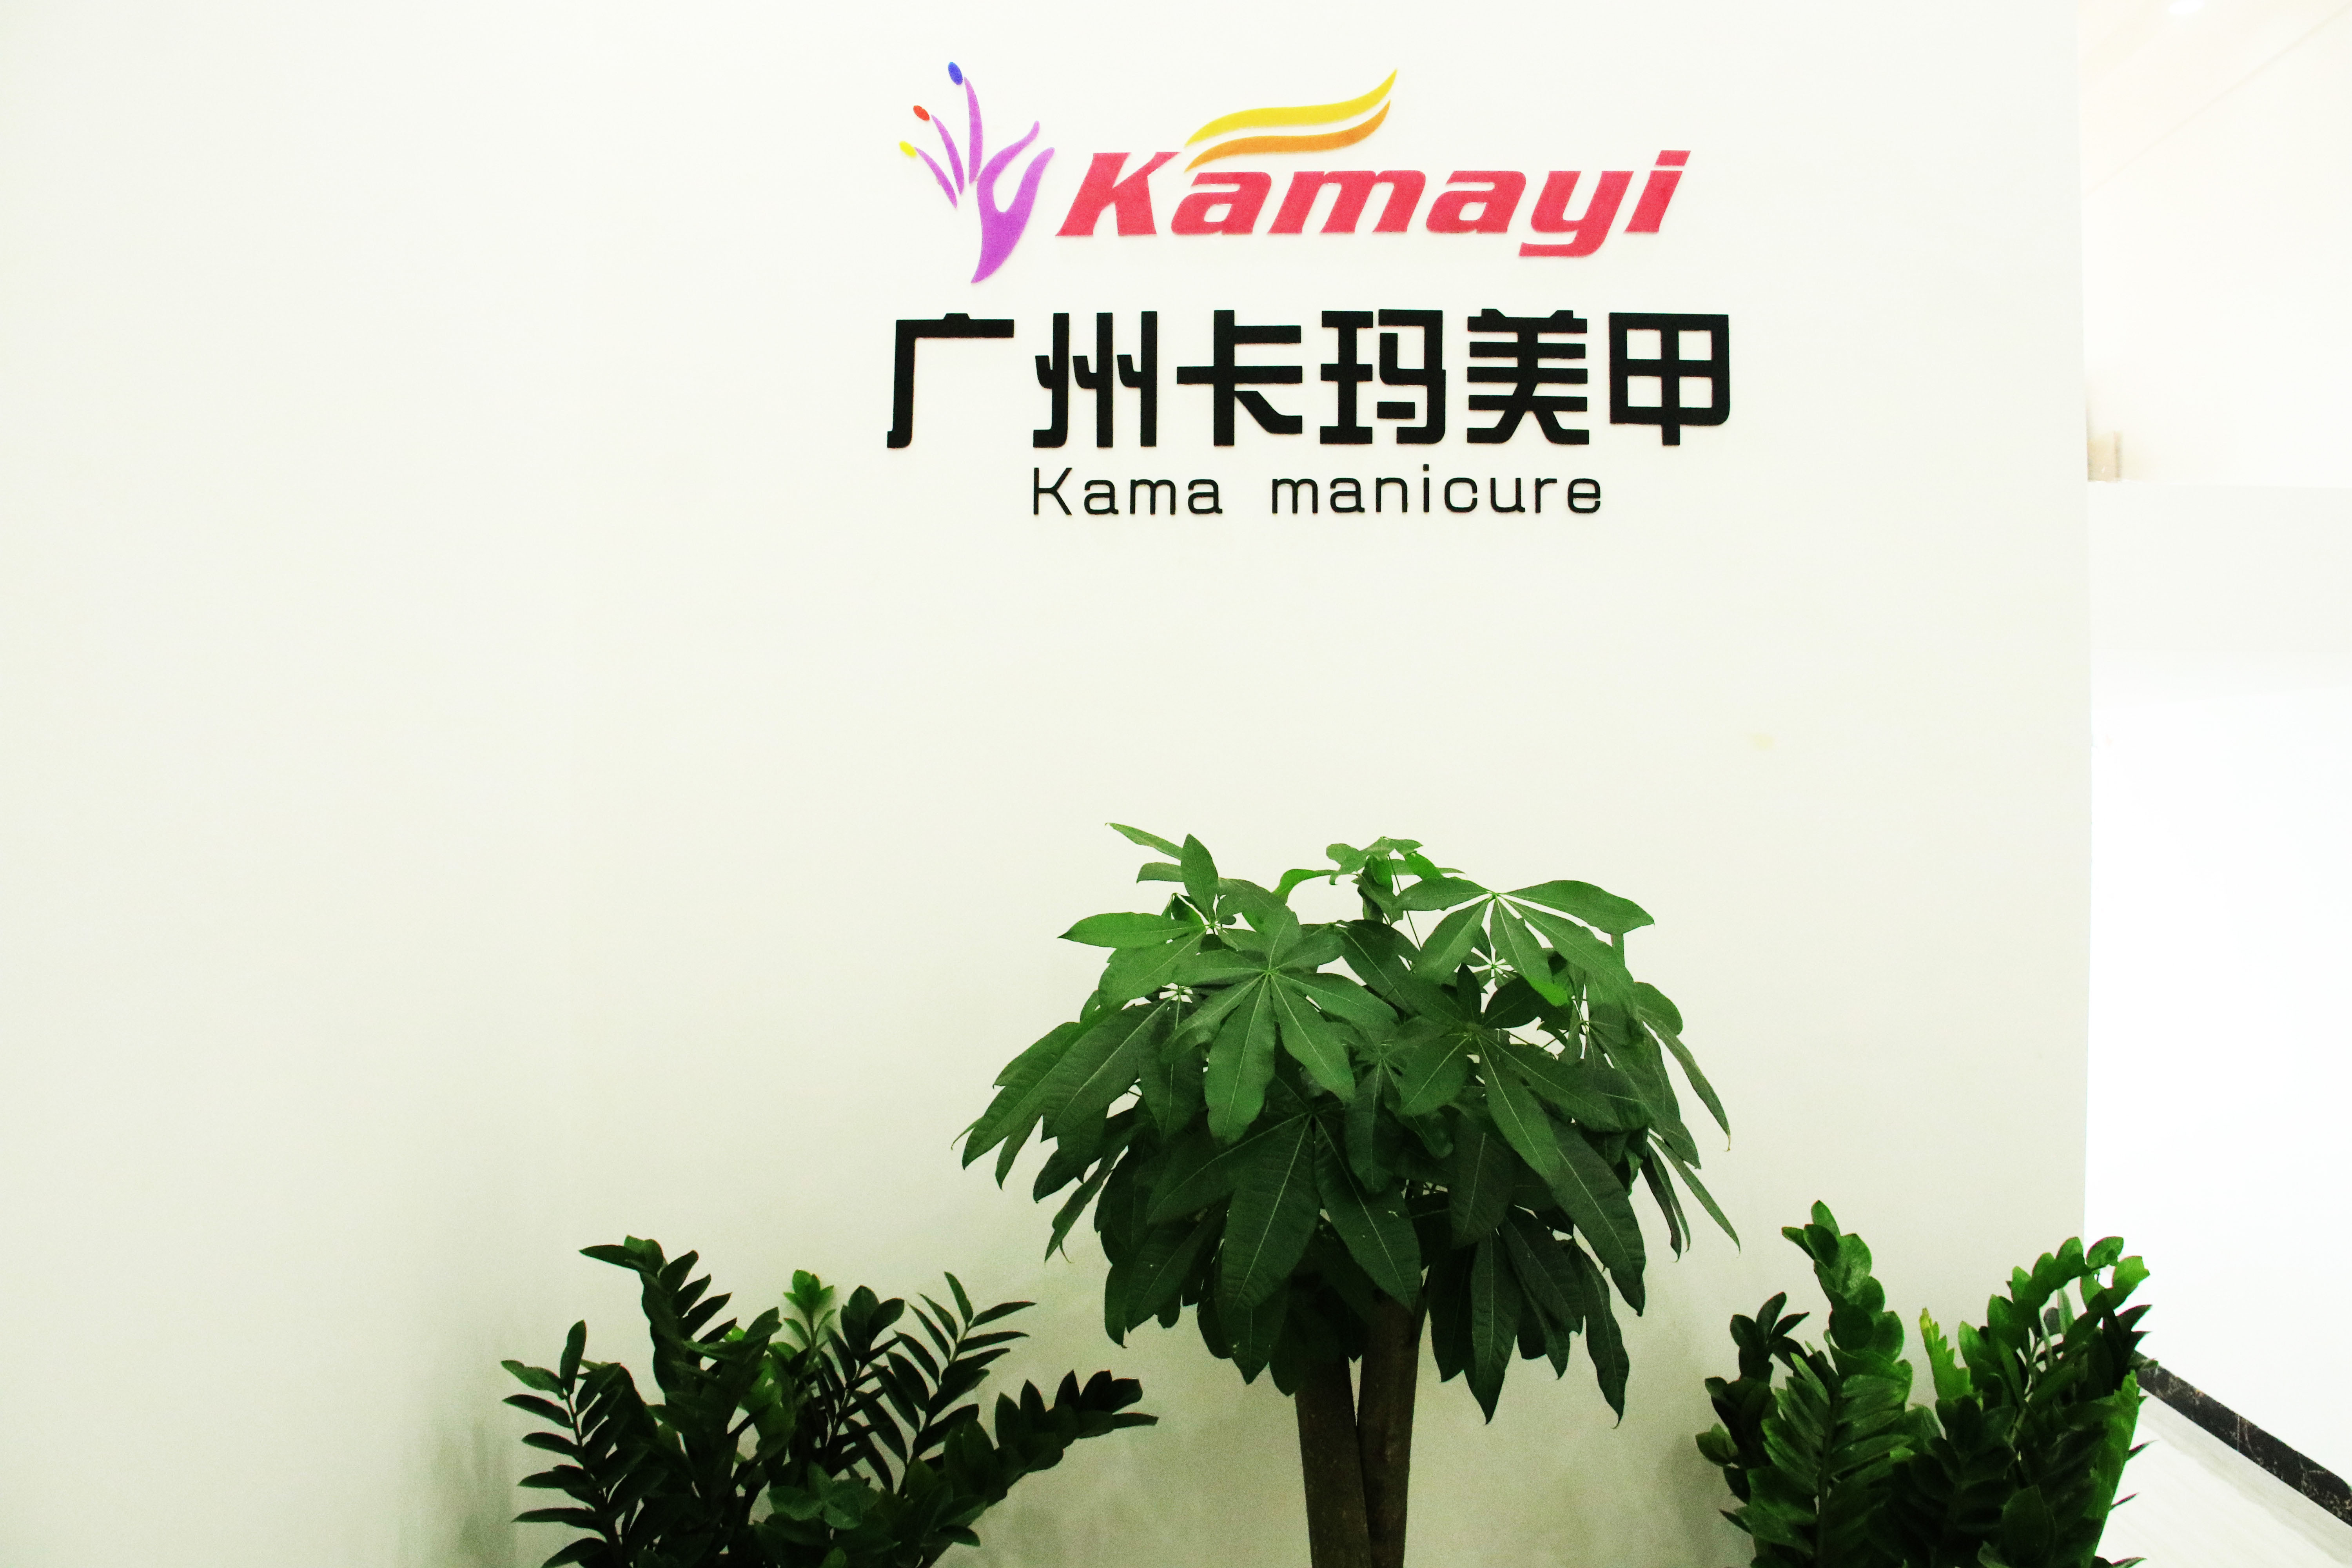 中国 Guangzhou Kama Manicure Products Ltd.